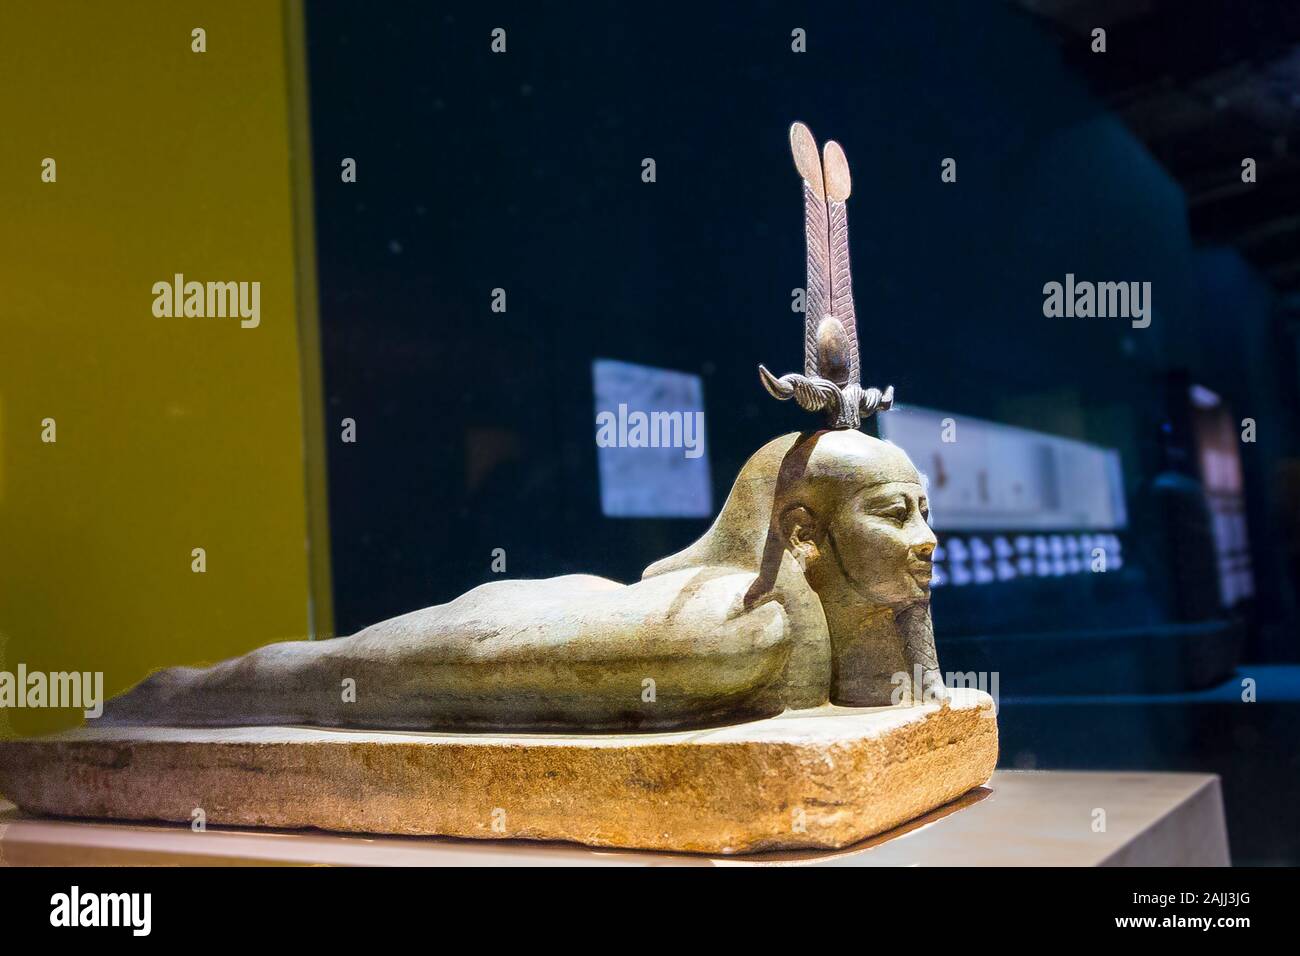 Photo taken during the opening visit of the exhibition “Osiris, Egypt's Sunken Mysteries”. Egypt, Cairo, Egyptian Museum, statue of the god Osiris. Stock Photo